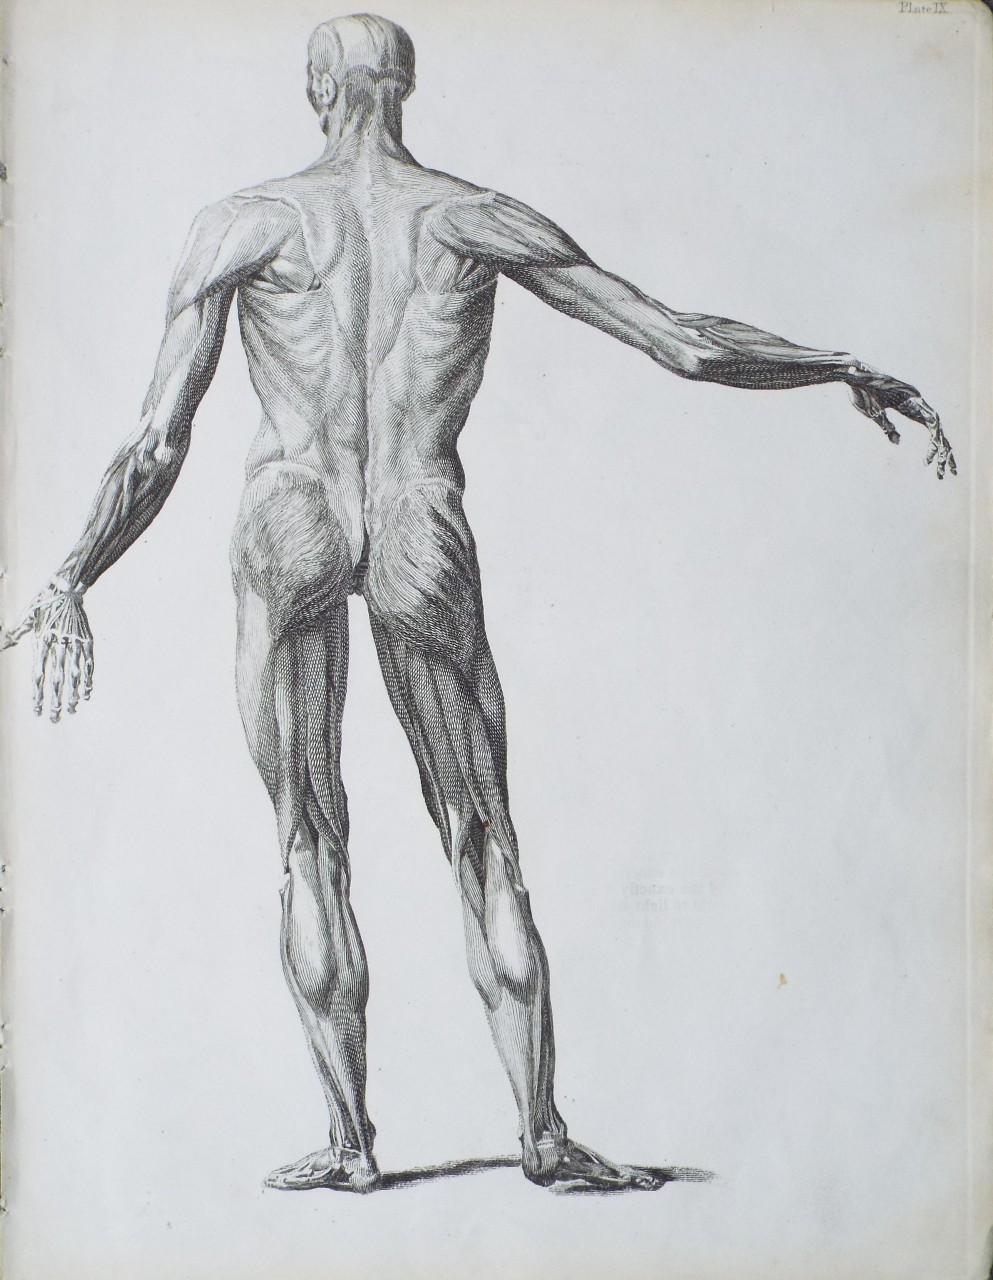 Print - (Human figure back view showing musculature)